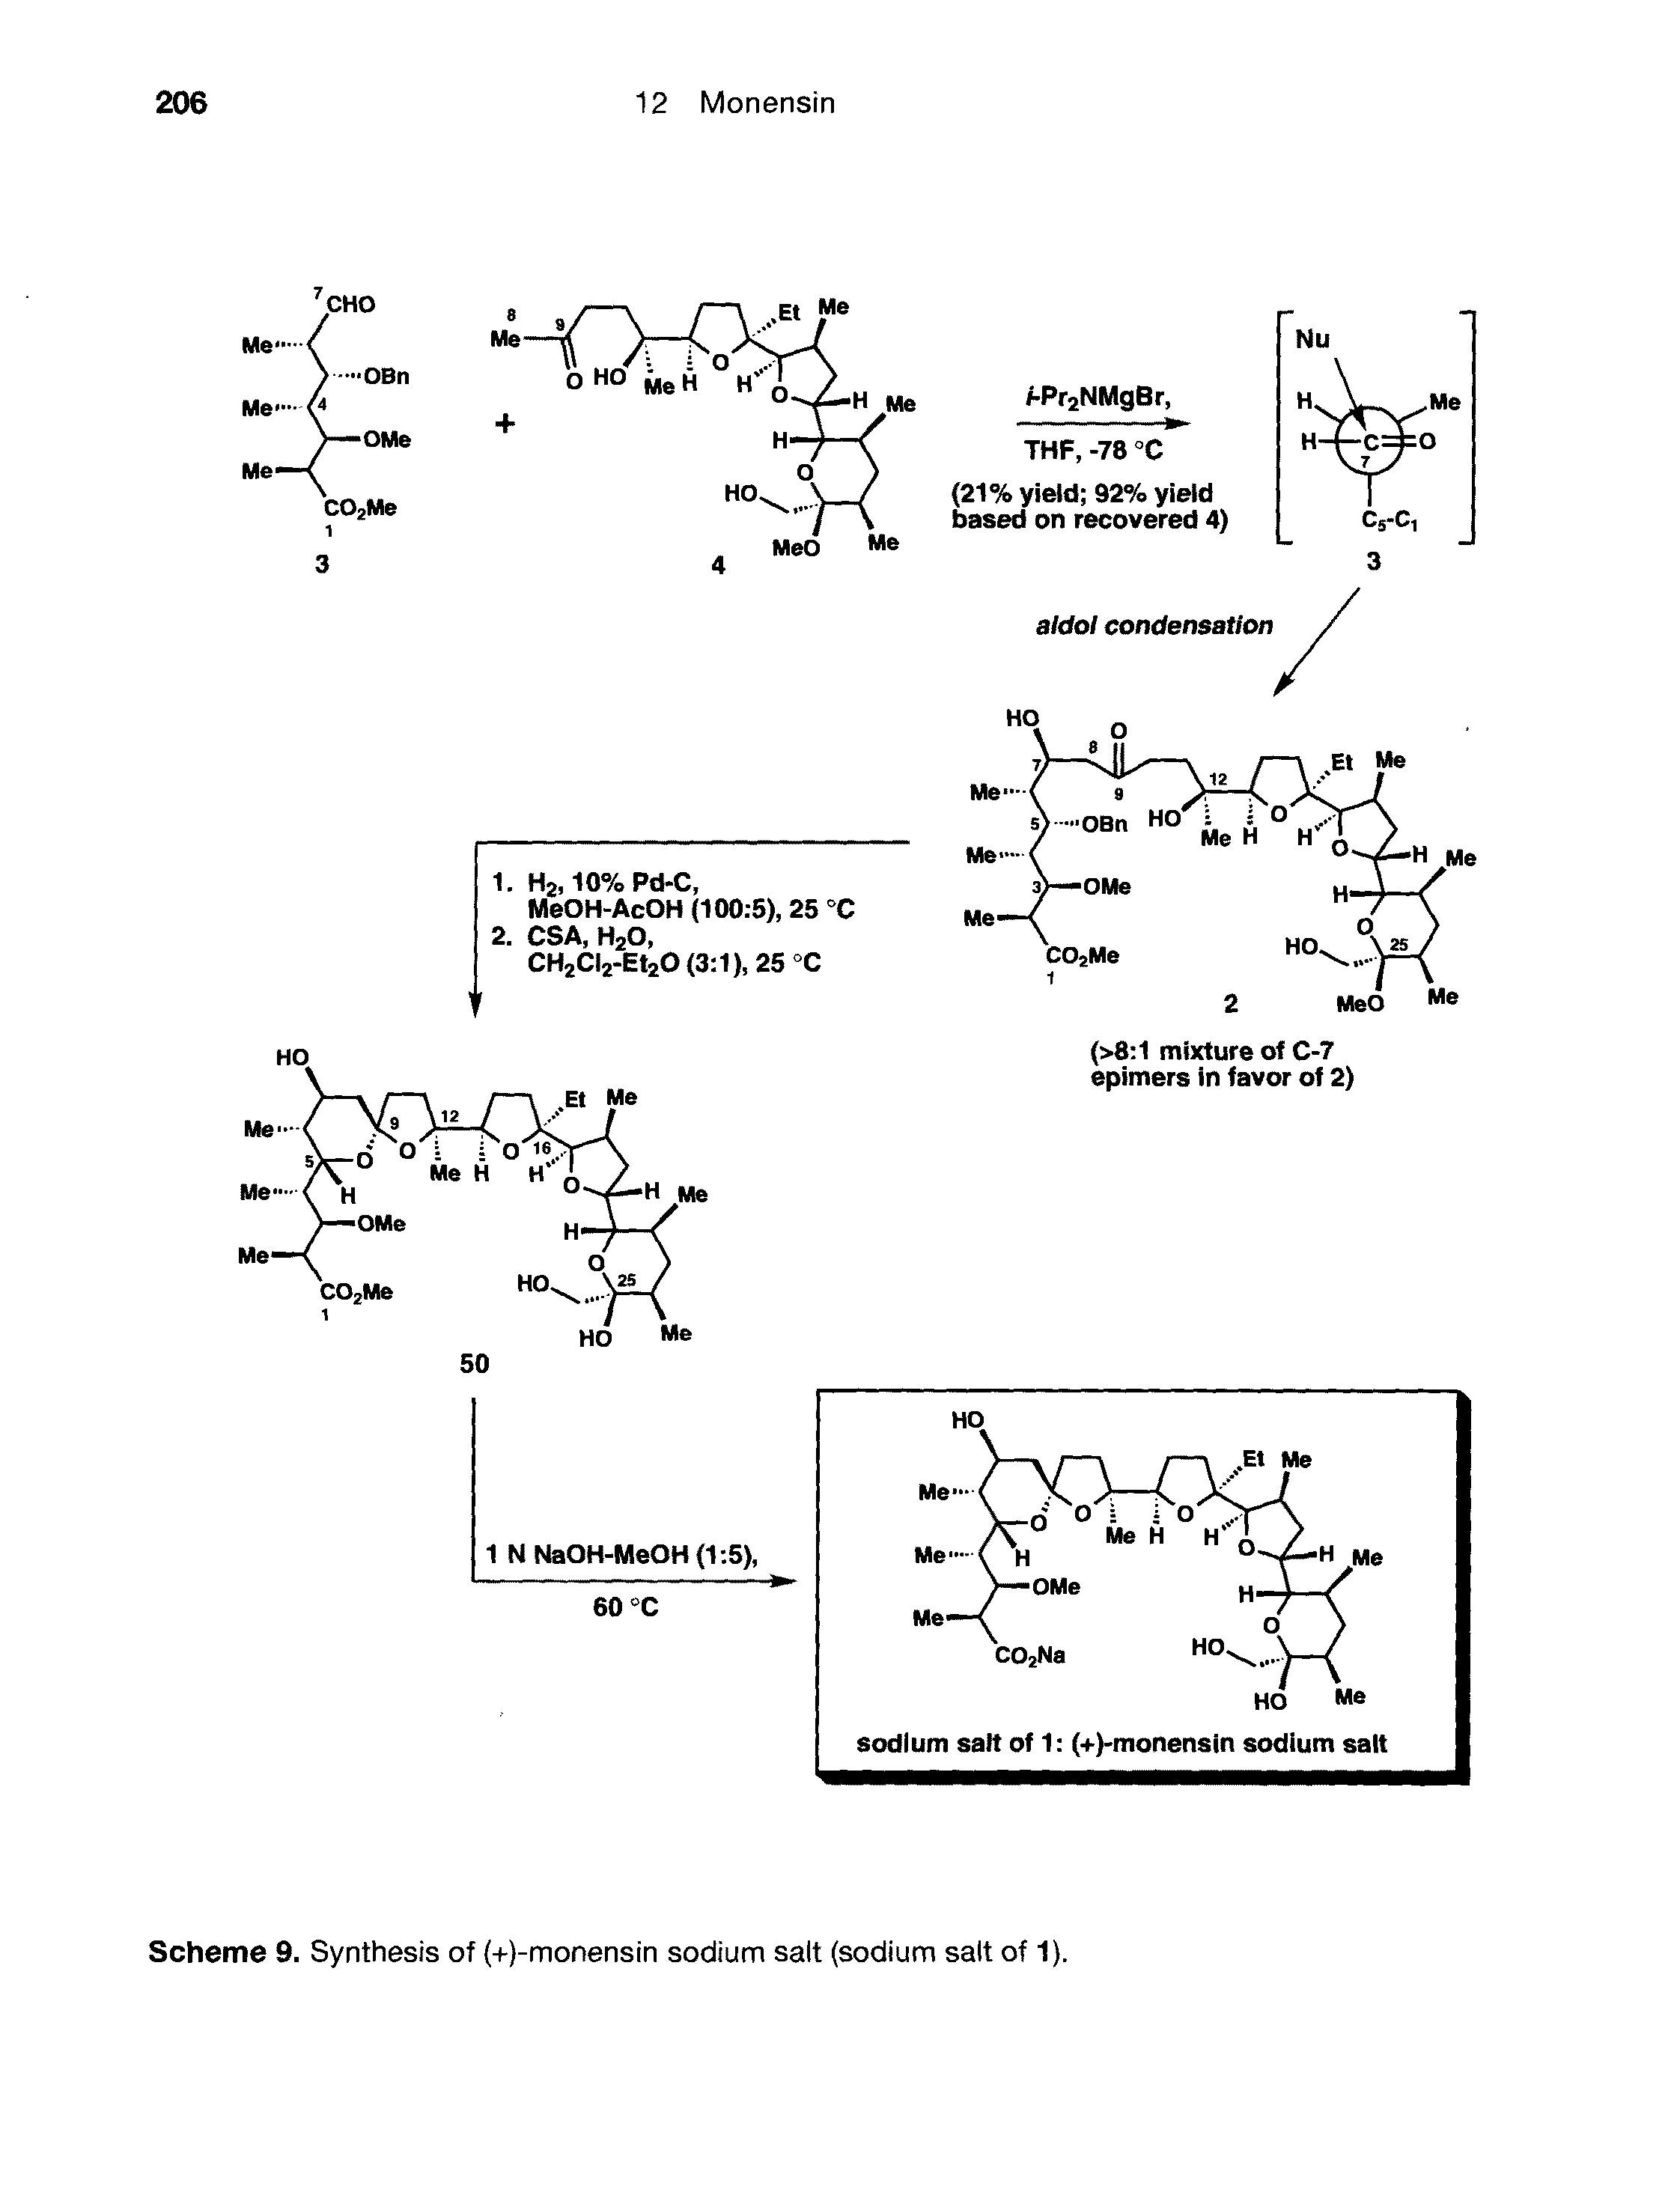 Scheme 9. Synthesis of (+)-monensin sodium salt (sodium salt of 1).